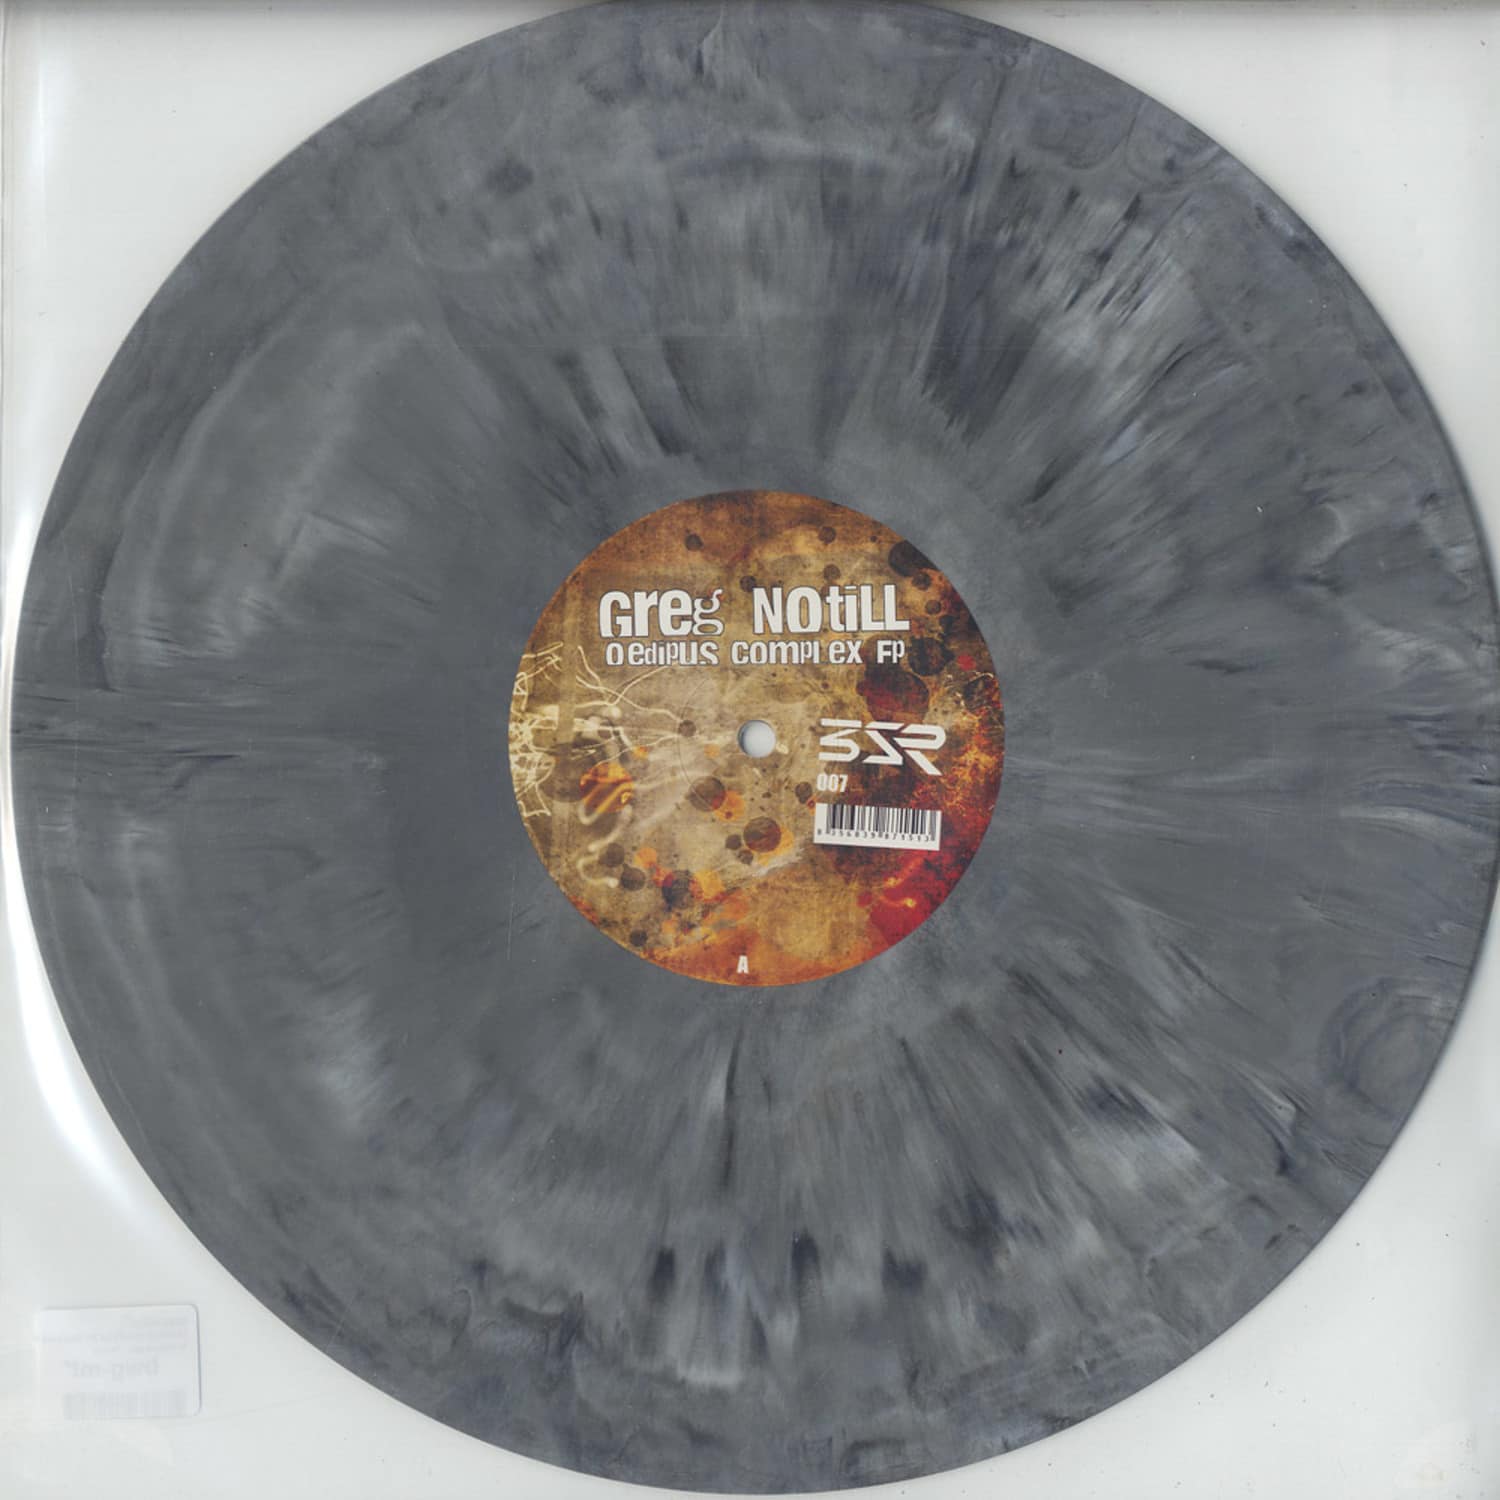 Greg Notill - OEDIPUS COMPLEX EP 